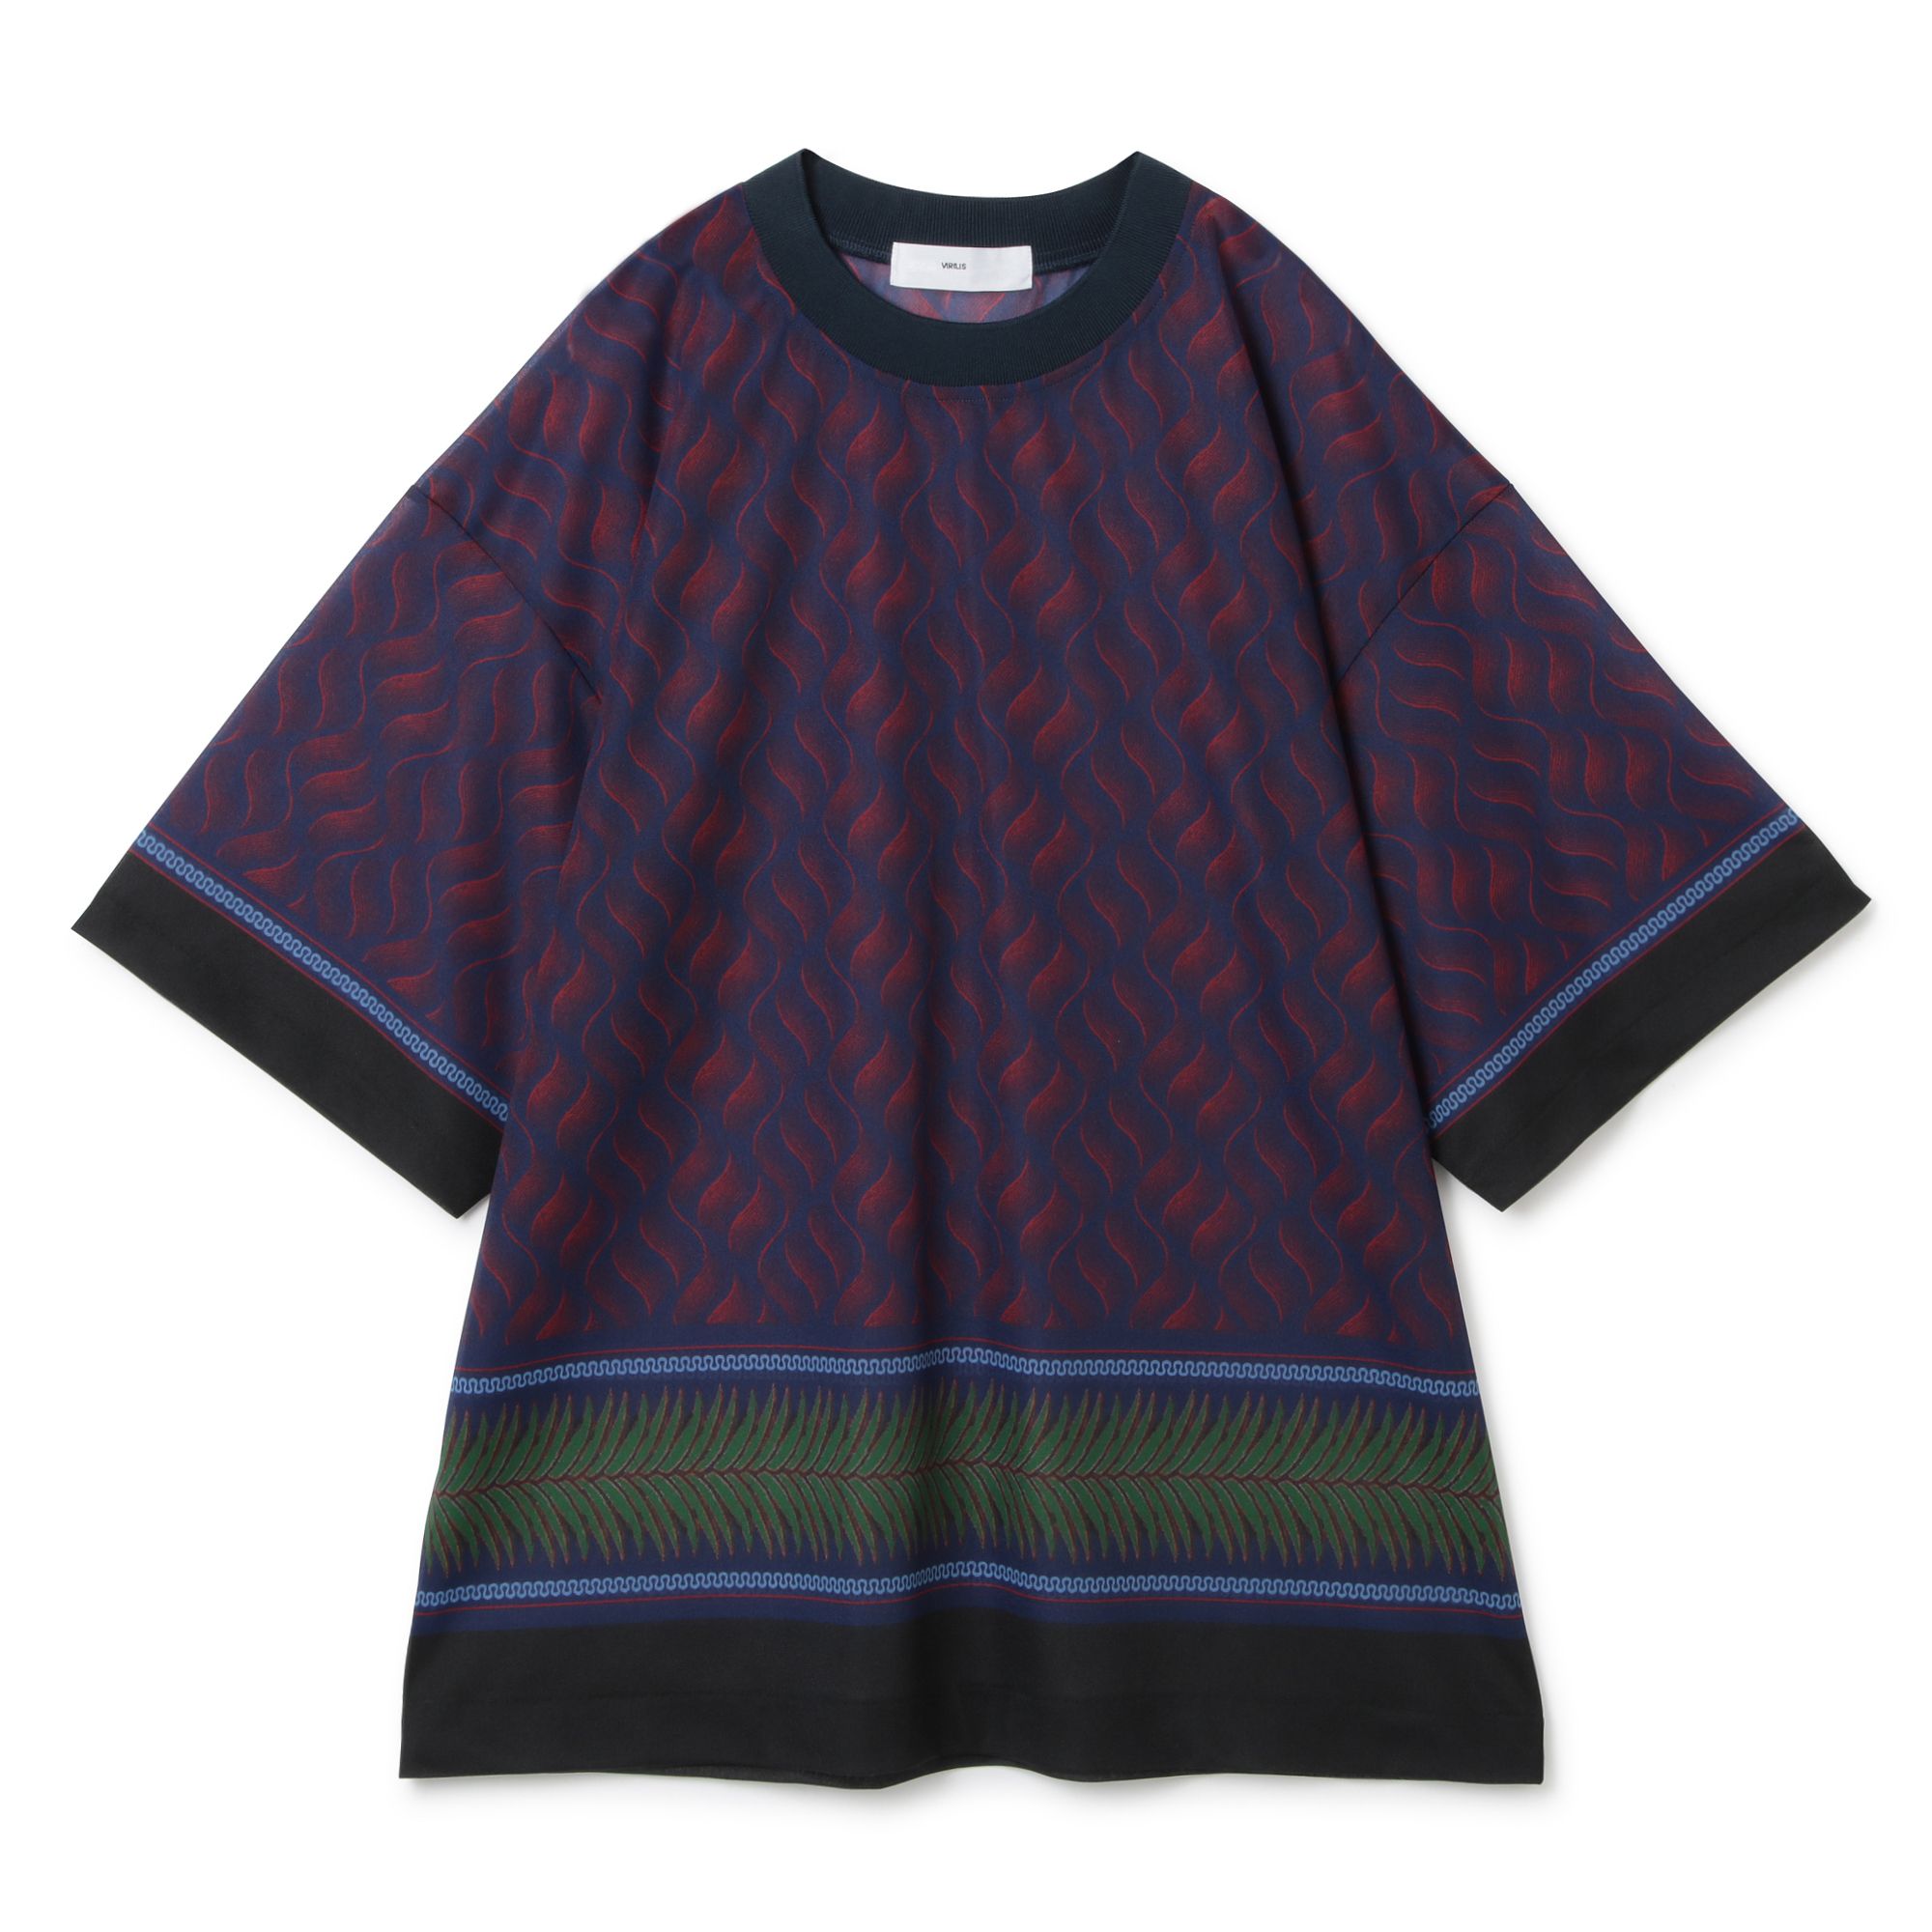  TOGA VIRILIS(トーガ ビリリース)/Sheer jersey print T−shirt